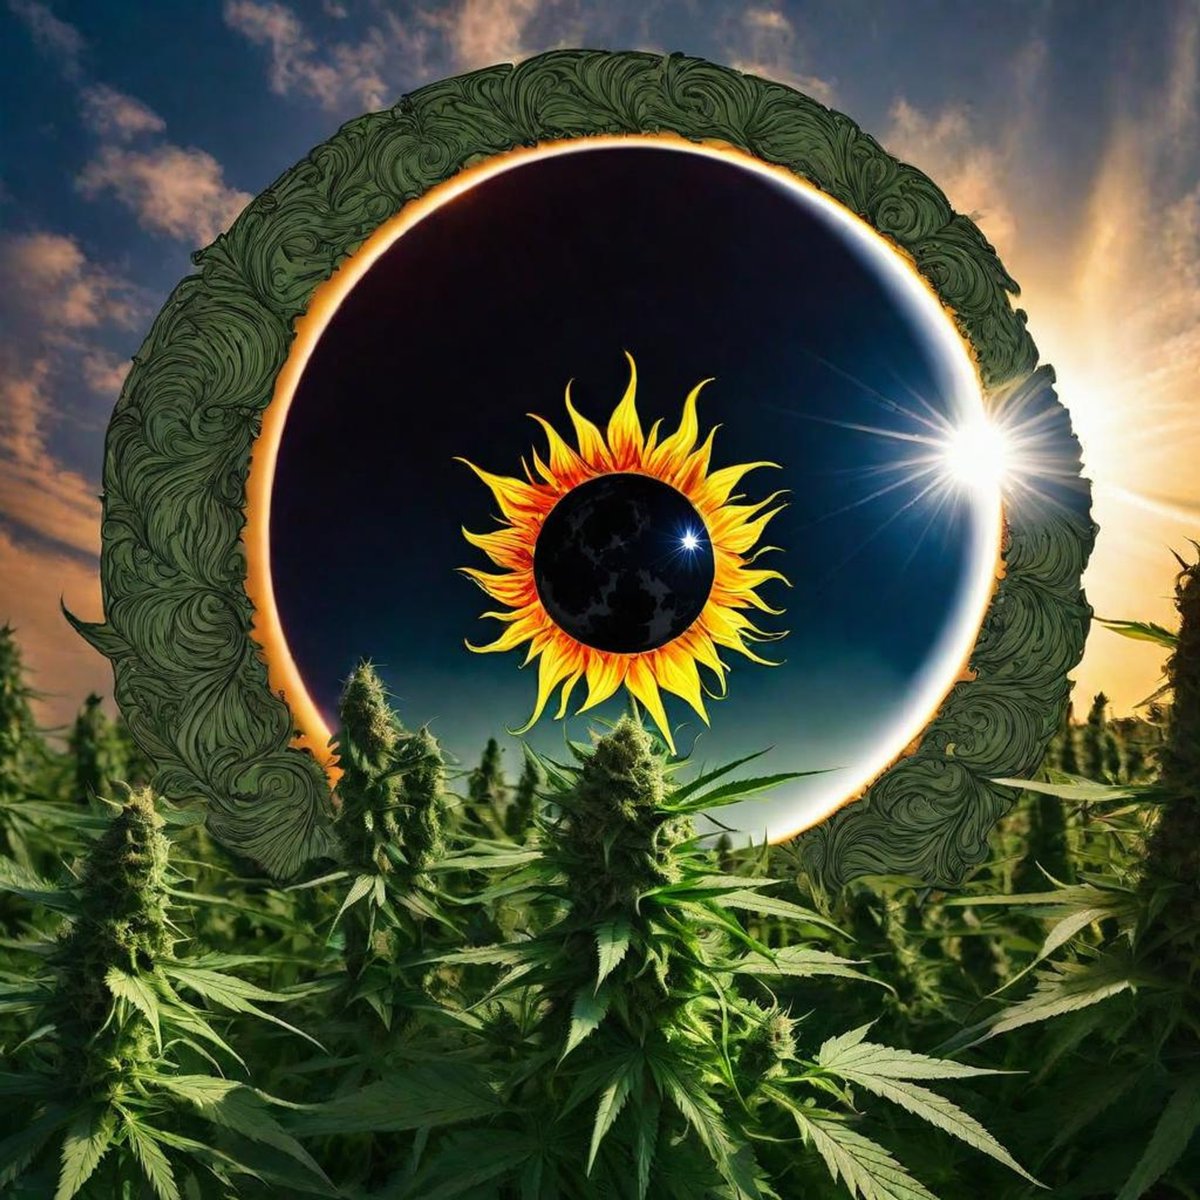 Black Hole Sun... You're the one...
#Marijane #Marijuana #Sunflower #Flowers
#justART #ART #NFT #NFTs #NFTcommunity 

@tilray @WeedFeed @MarijuanaNews @MarijuanaStocks @WeedPorns @stillblazingtho 

As seen on @LimeWire 
Follow @MayzeRunnuh to get #blessed with #Dank #Artwork